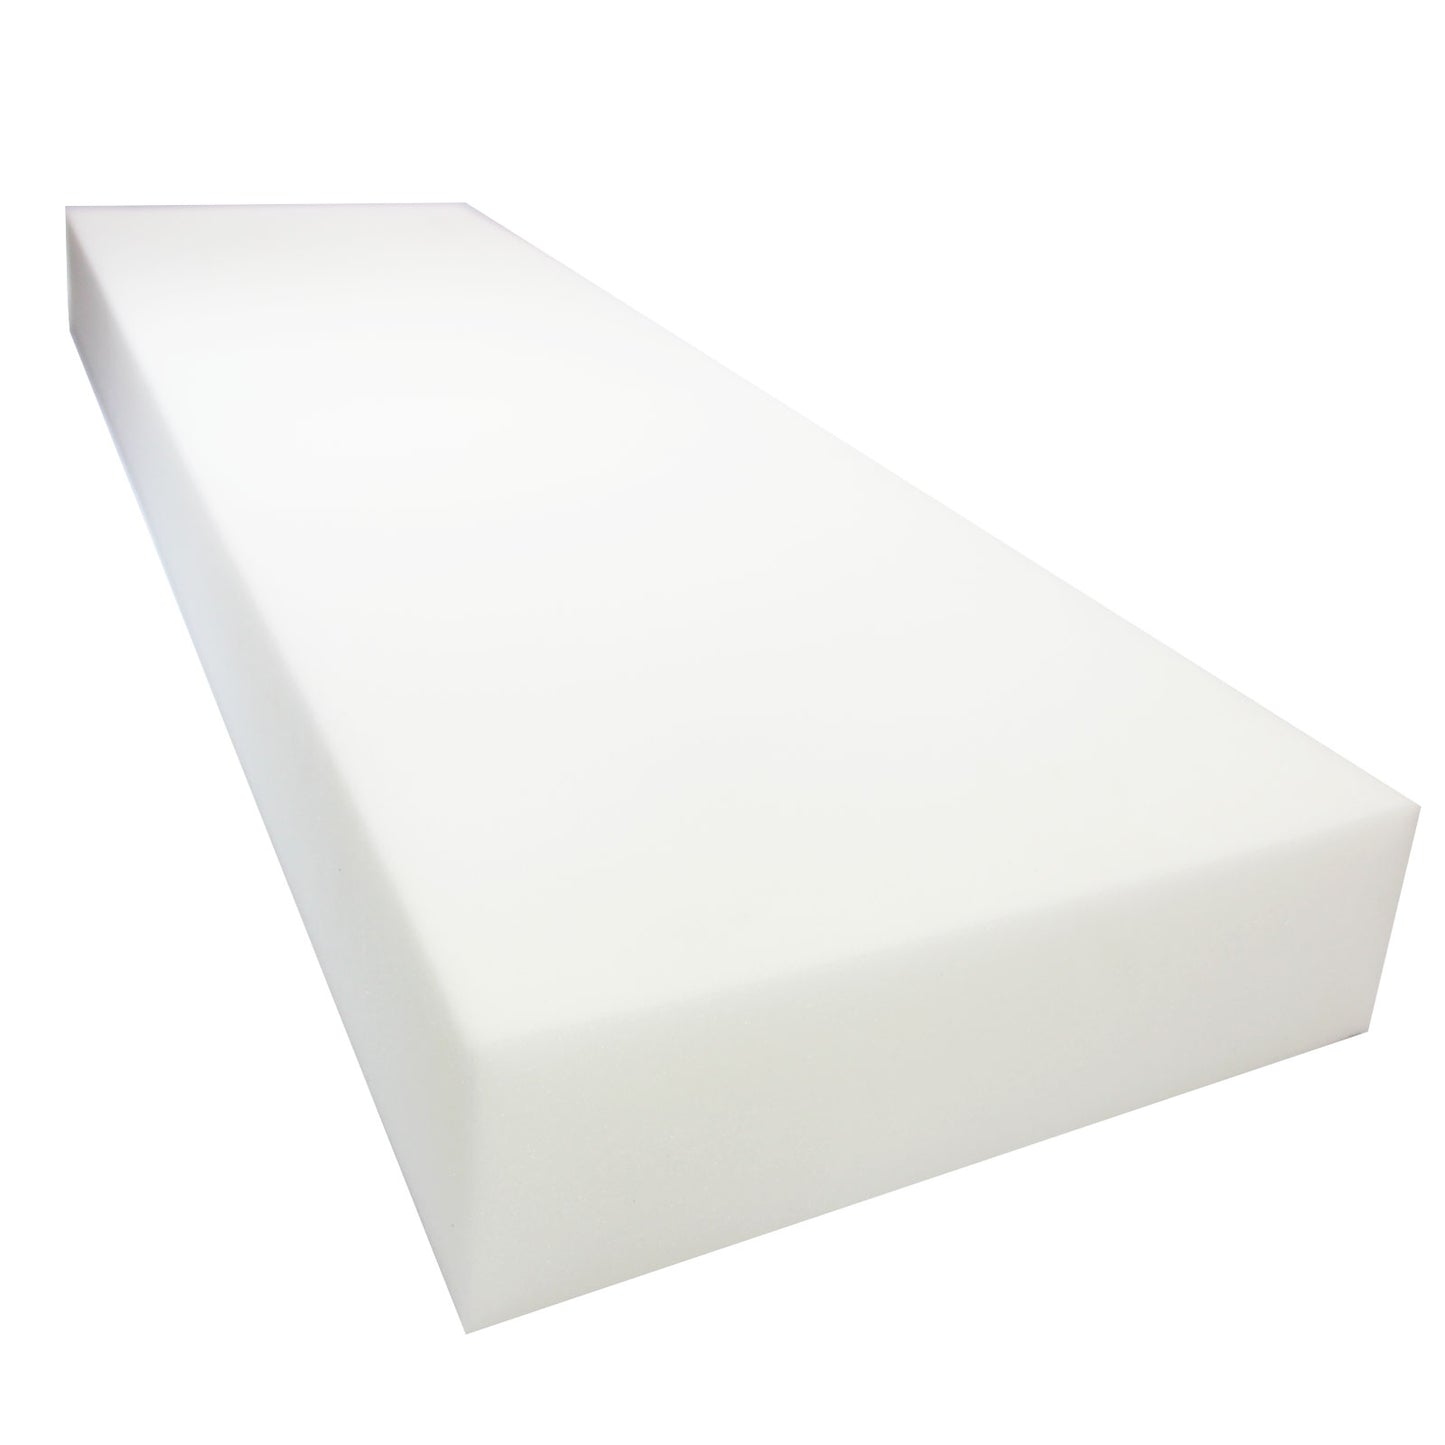 FoamTouch Upholstery Foam Cushion High Density 5 H x 24 W x 24 L